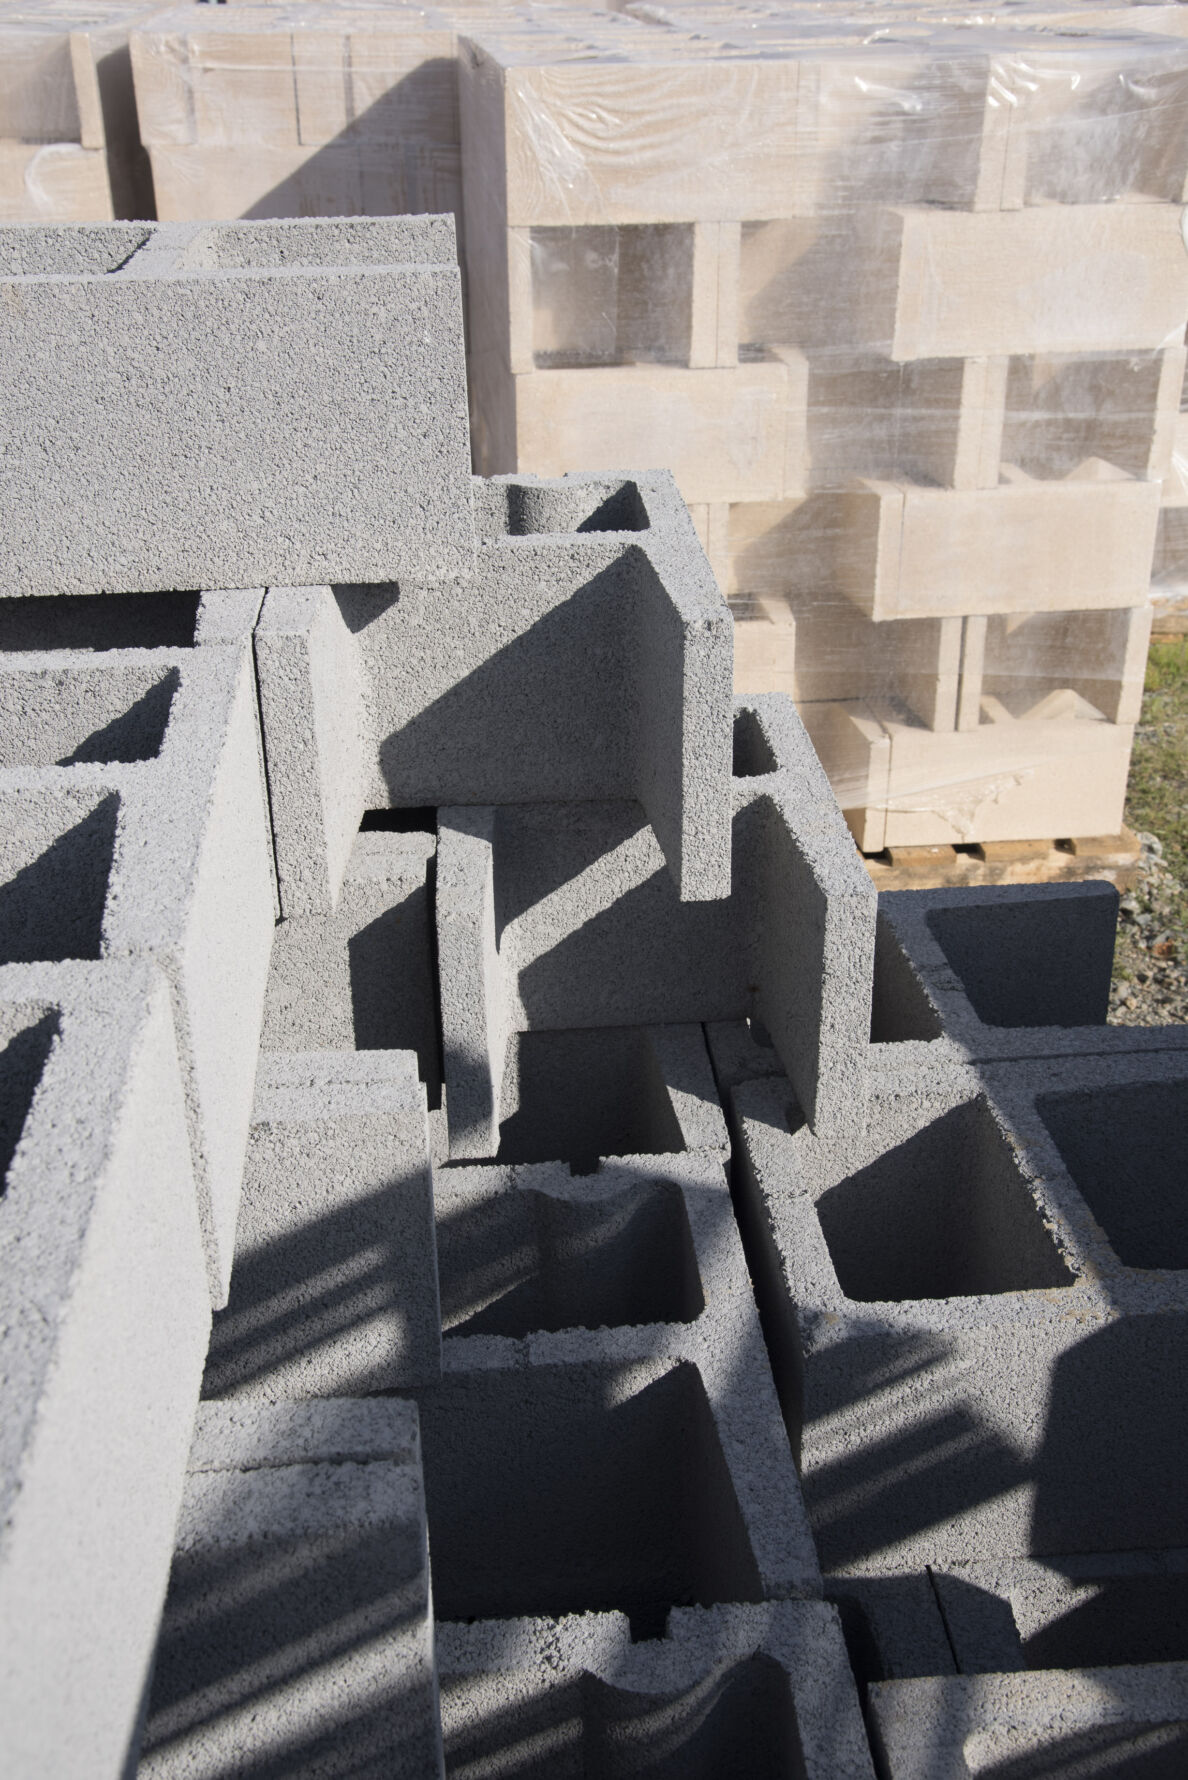 Construction site featuring Johnson Concrete Products ProBlock